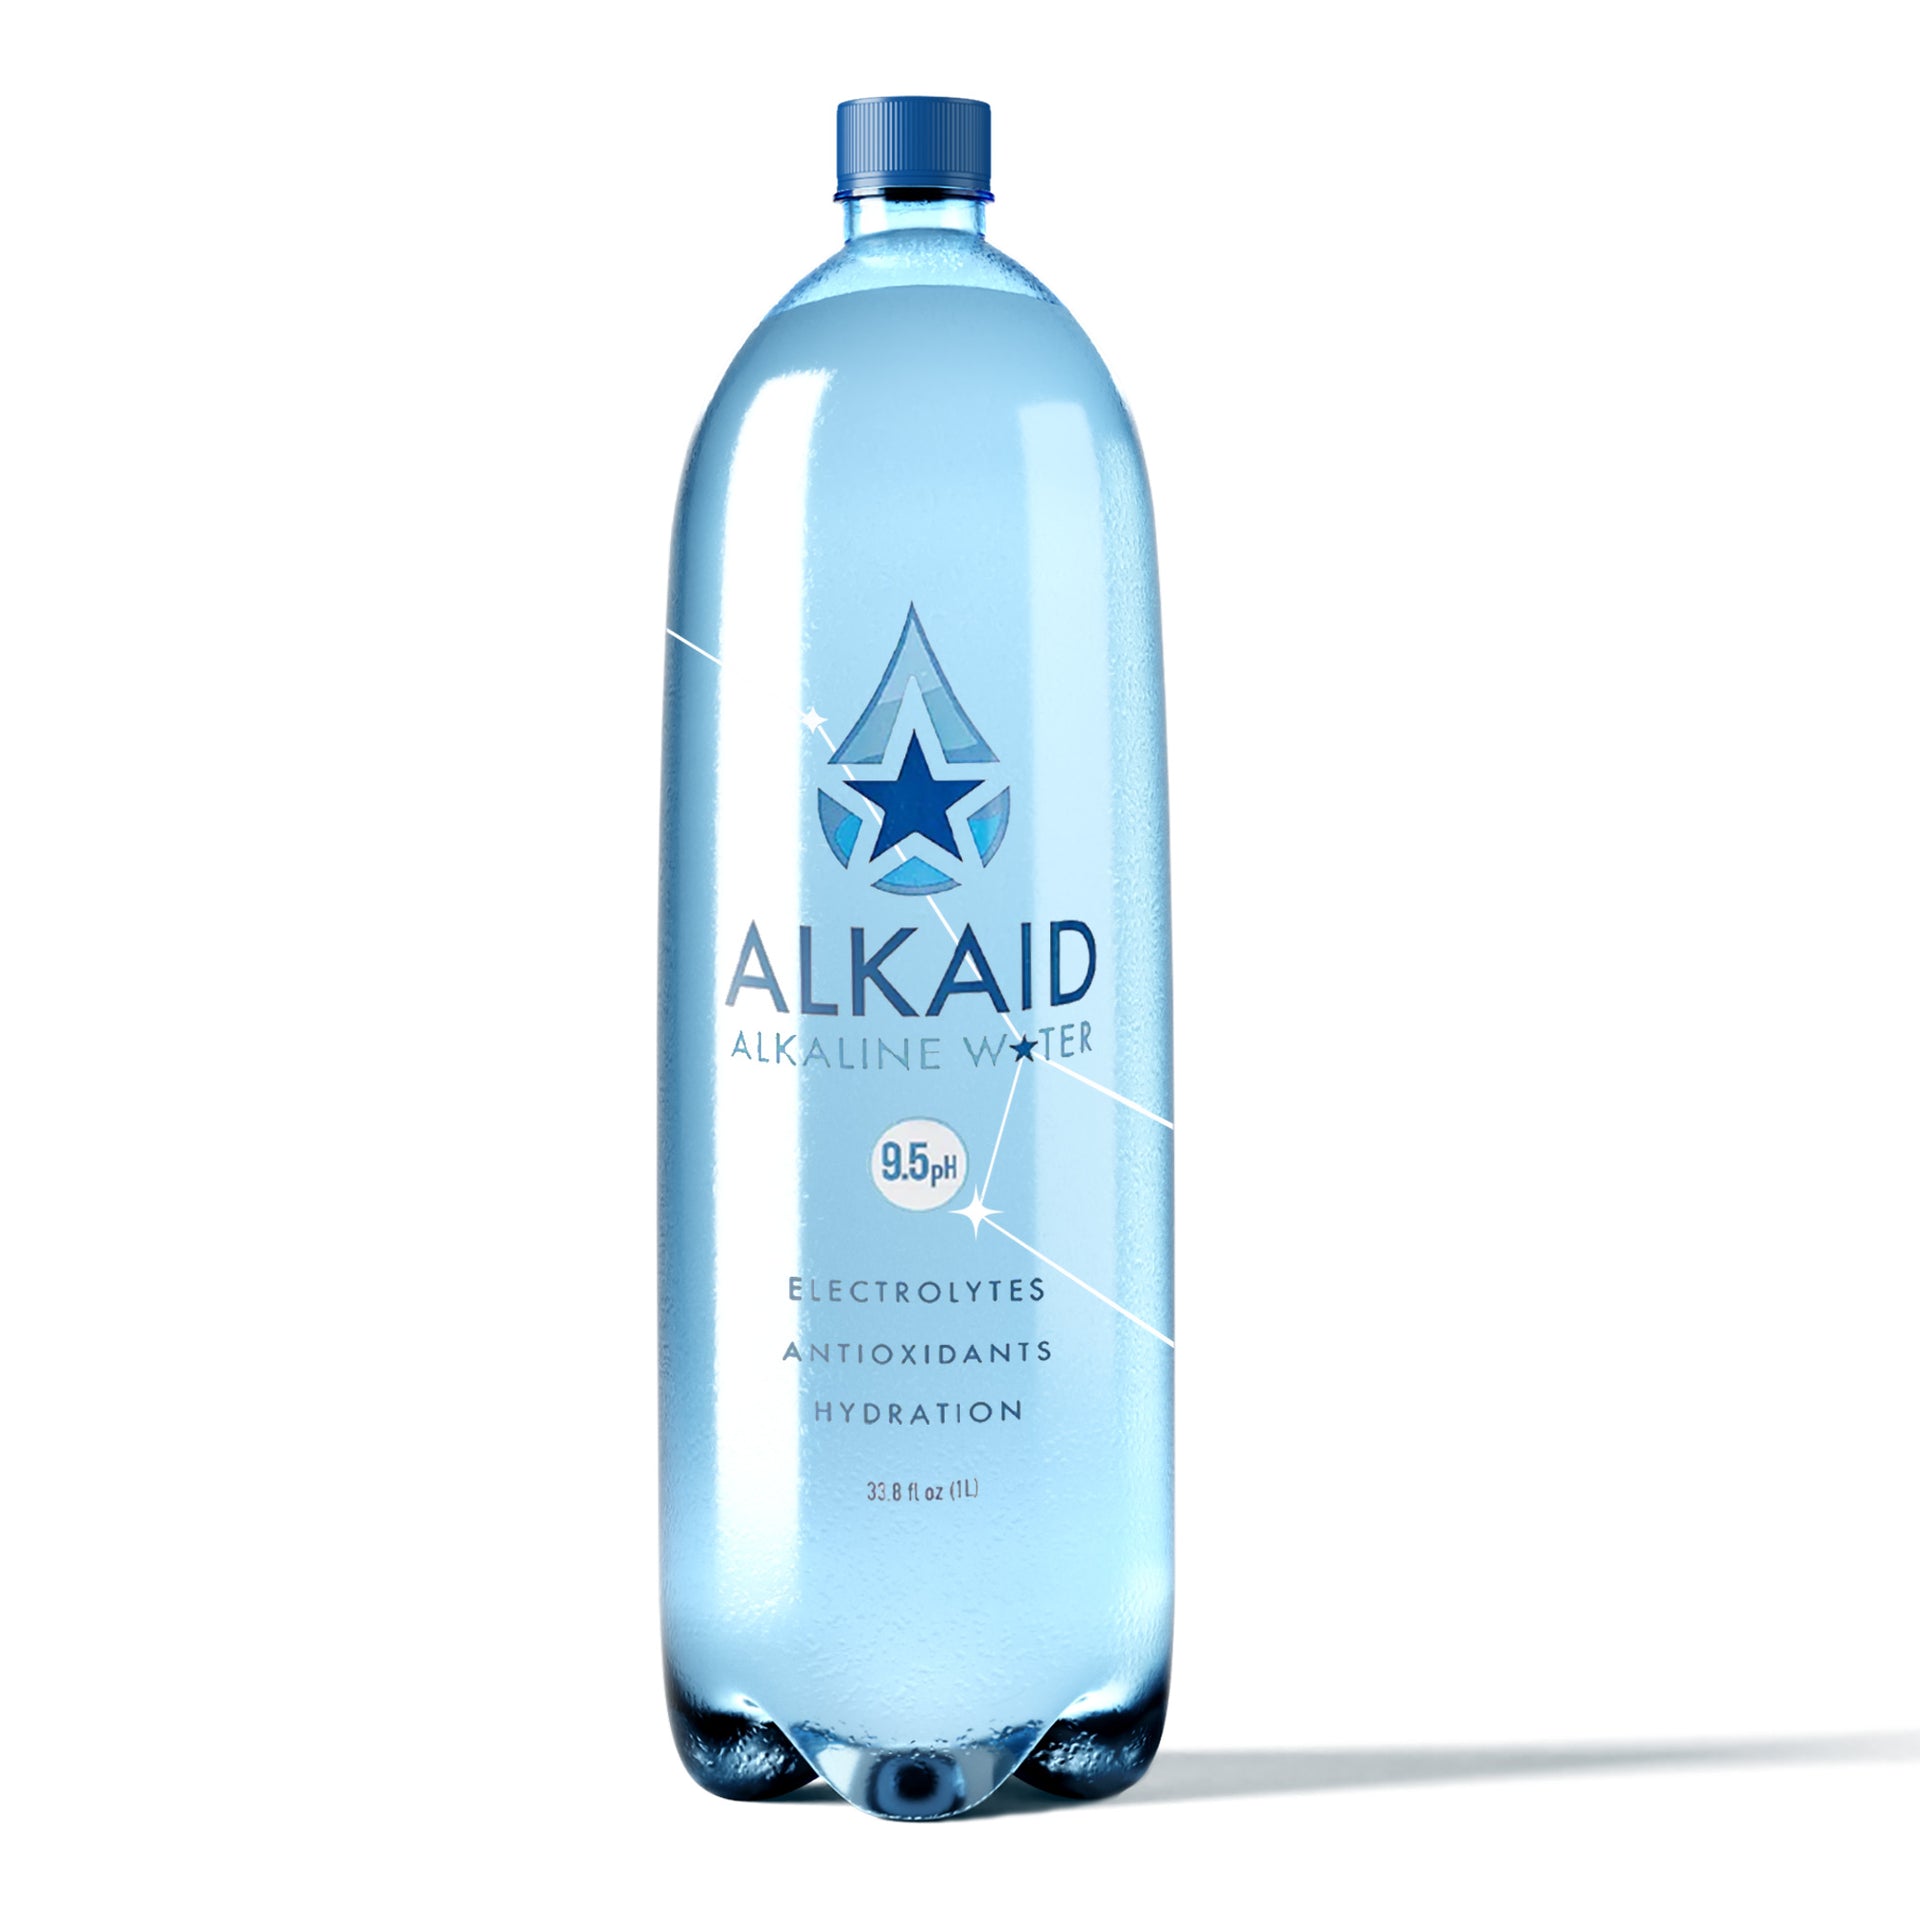 1L Alkaid Alkaline Water by bluestar 12 pack